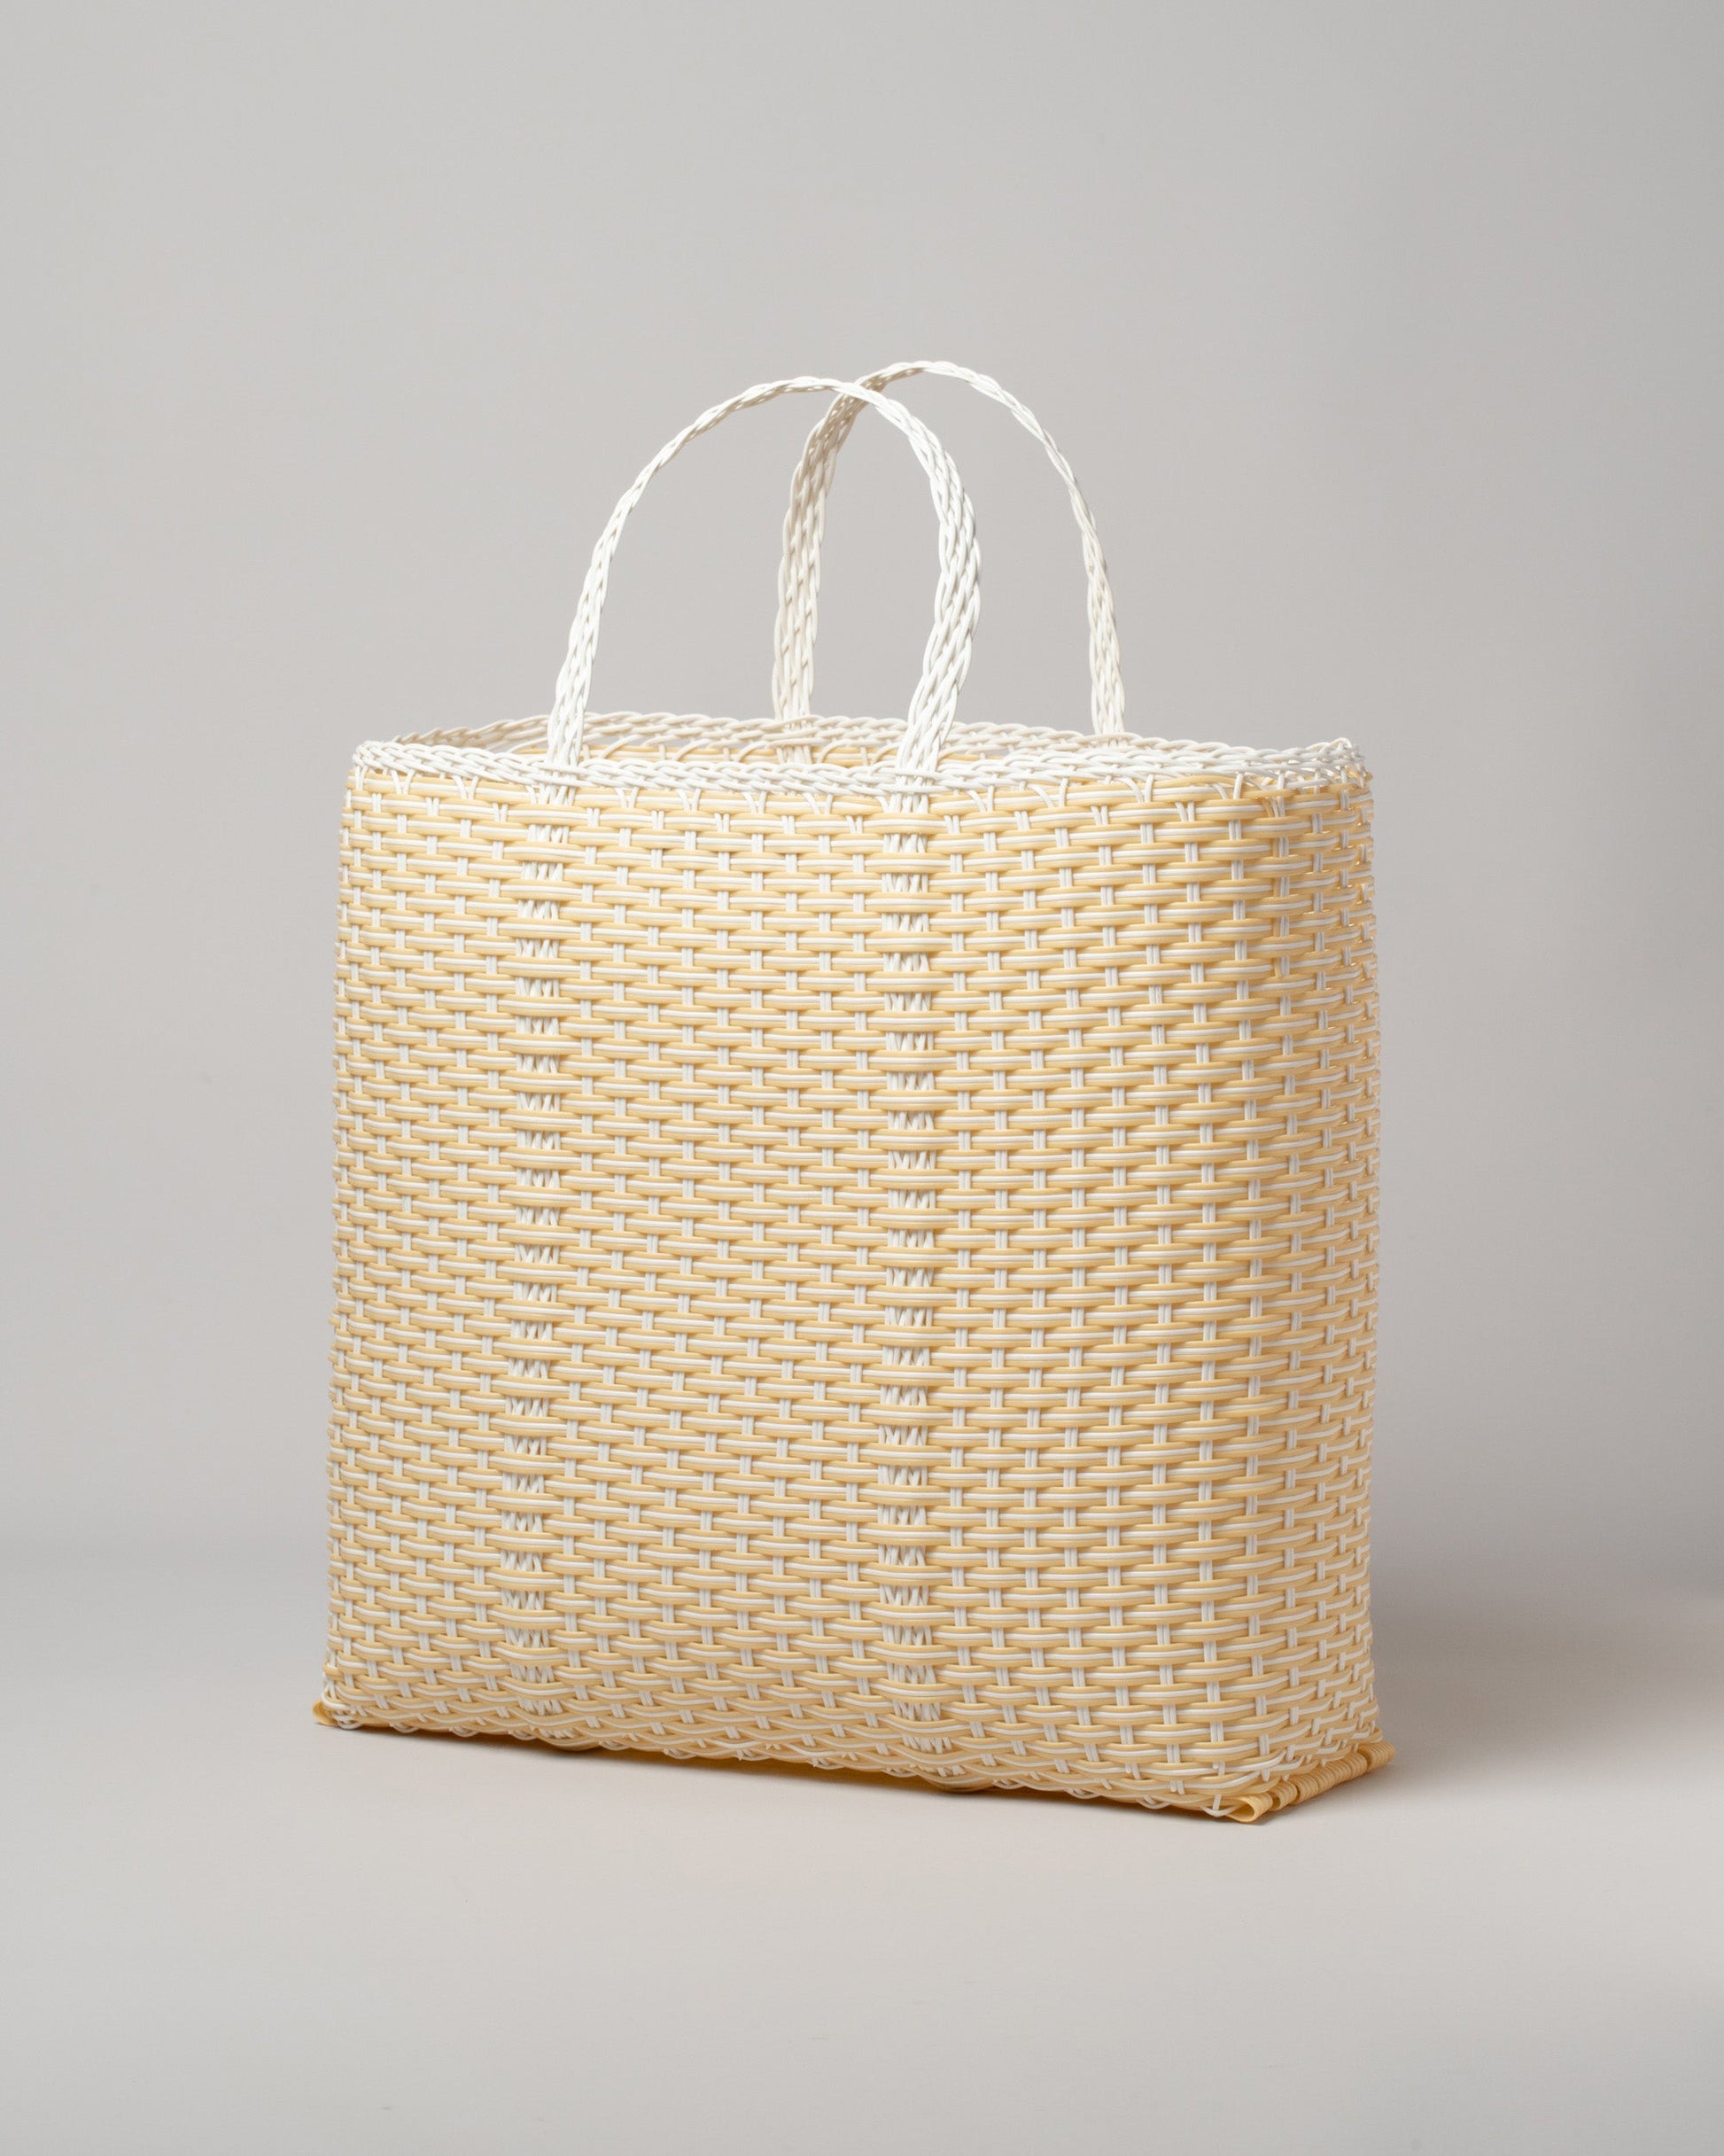 Palorosa Large White & Cream Bicolor Tote Basket Bag on light color background.